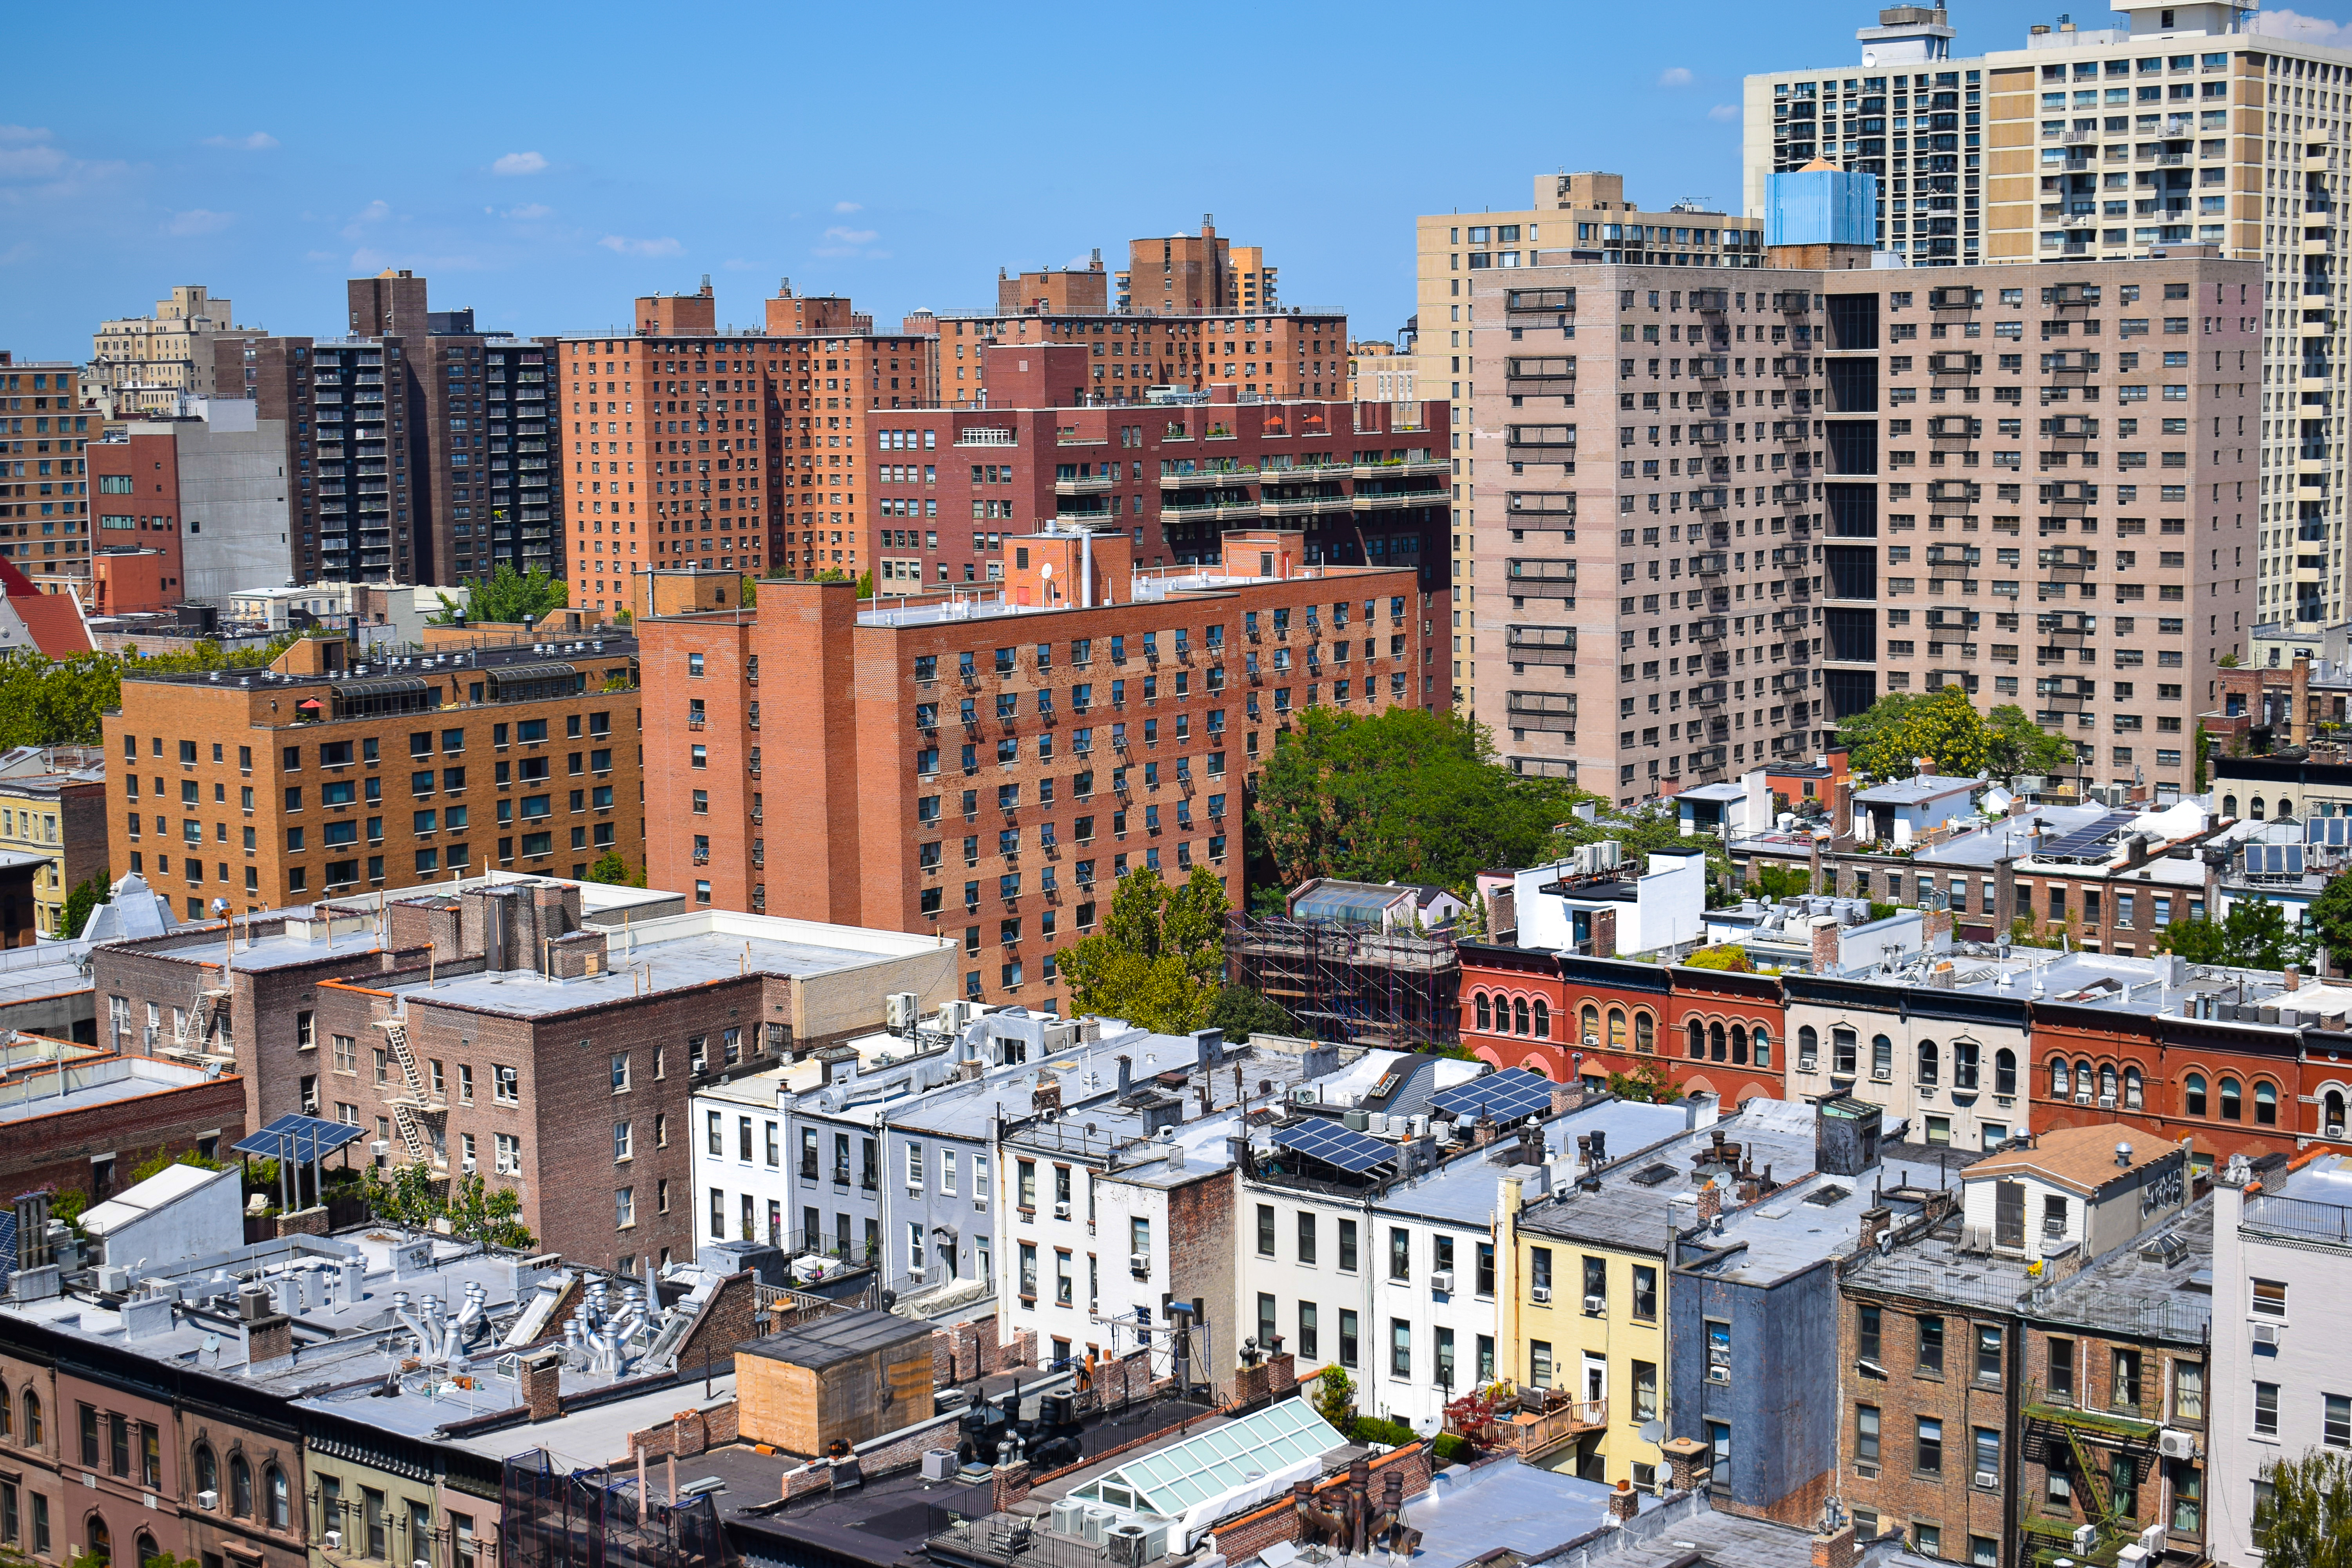 Aerial view of dense apartment buildings.